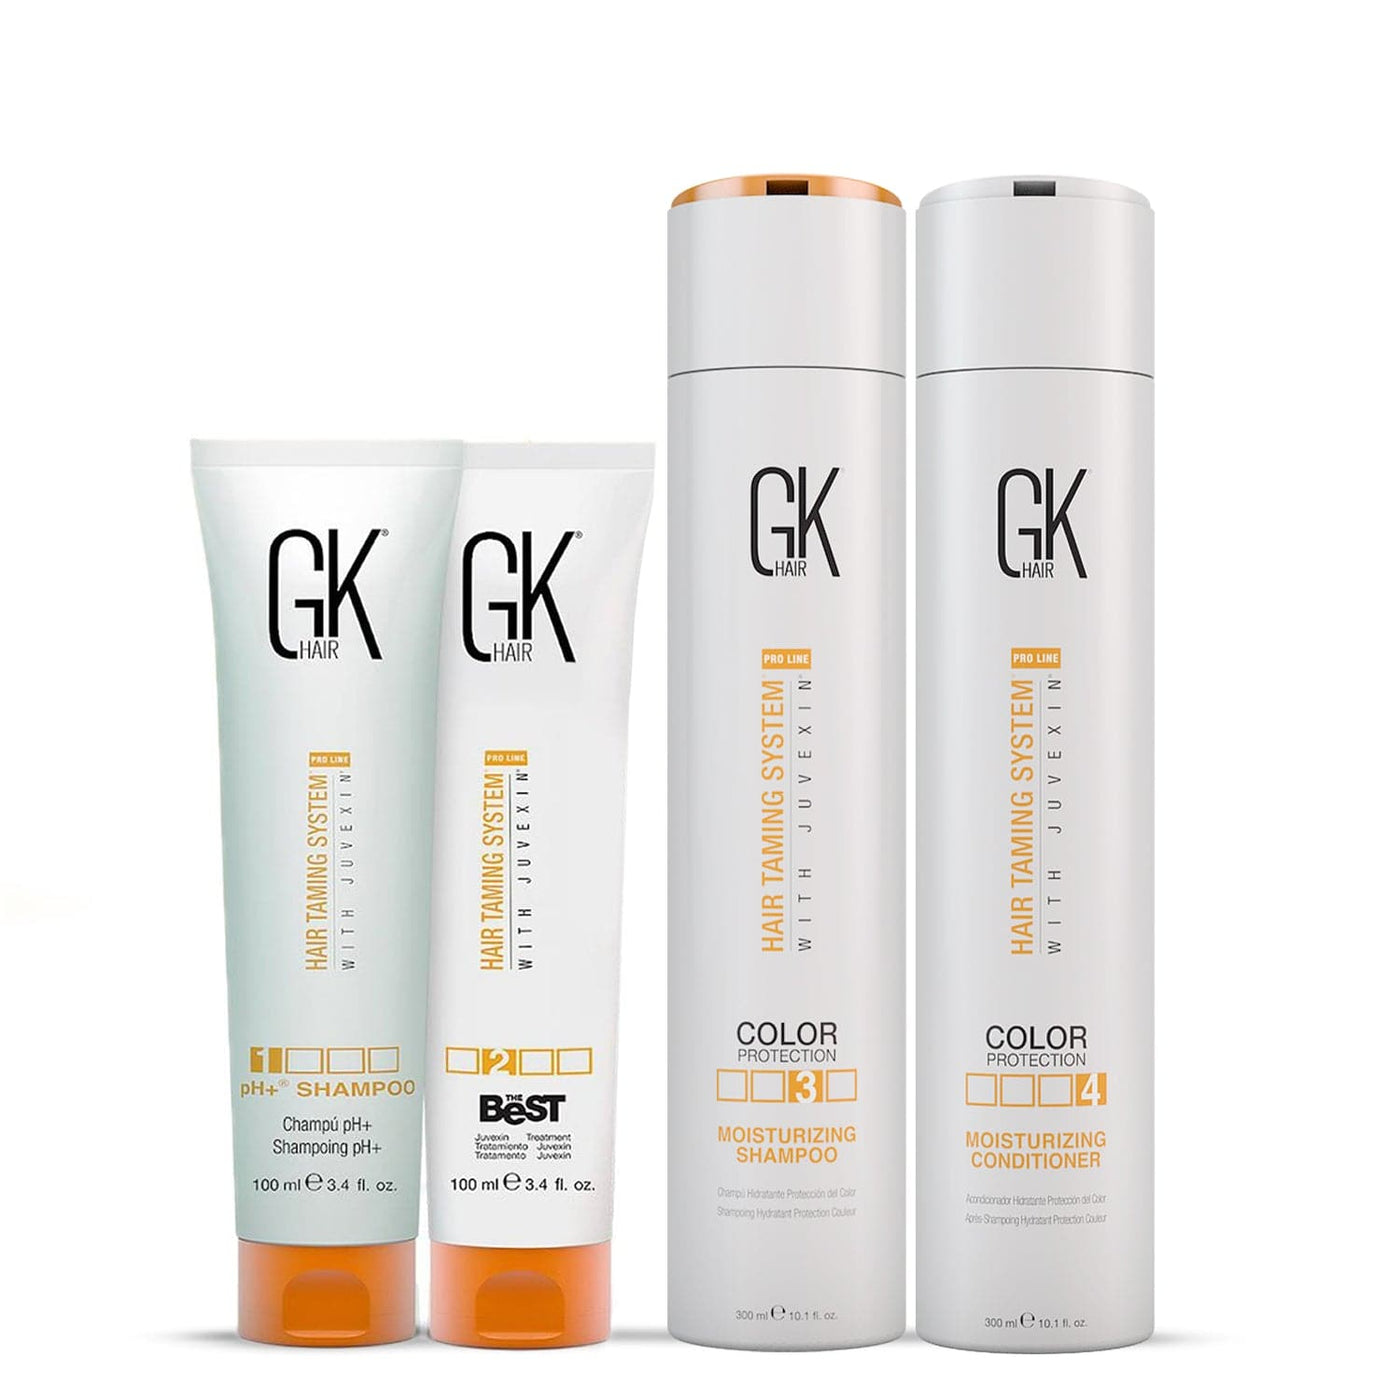 The Best Keratin Professional Hair Kit 300ml